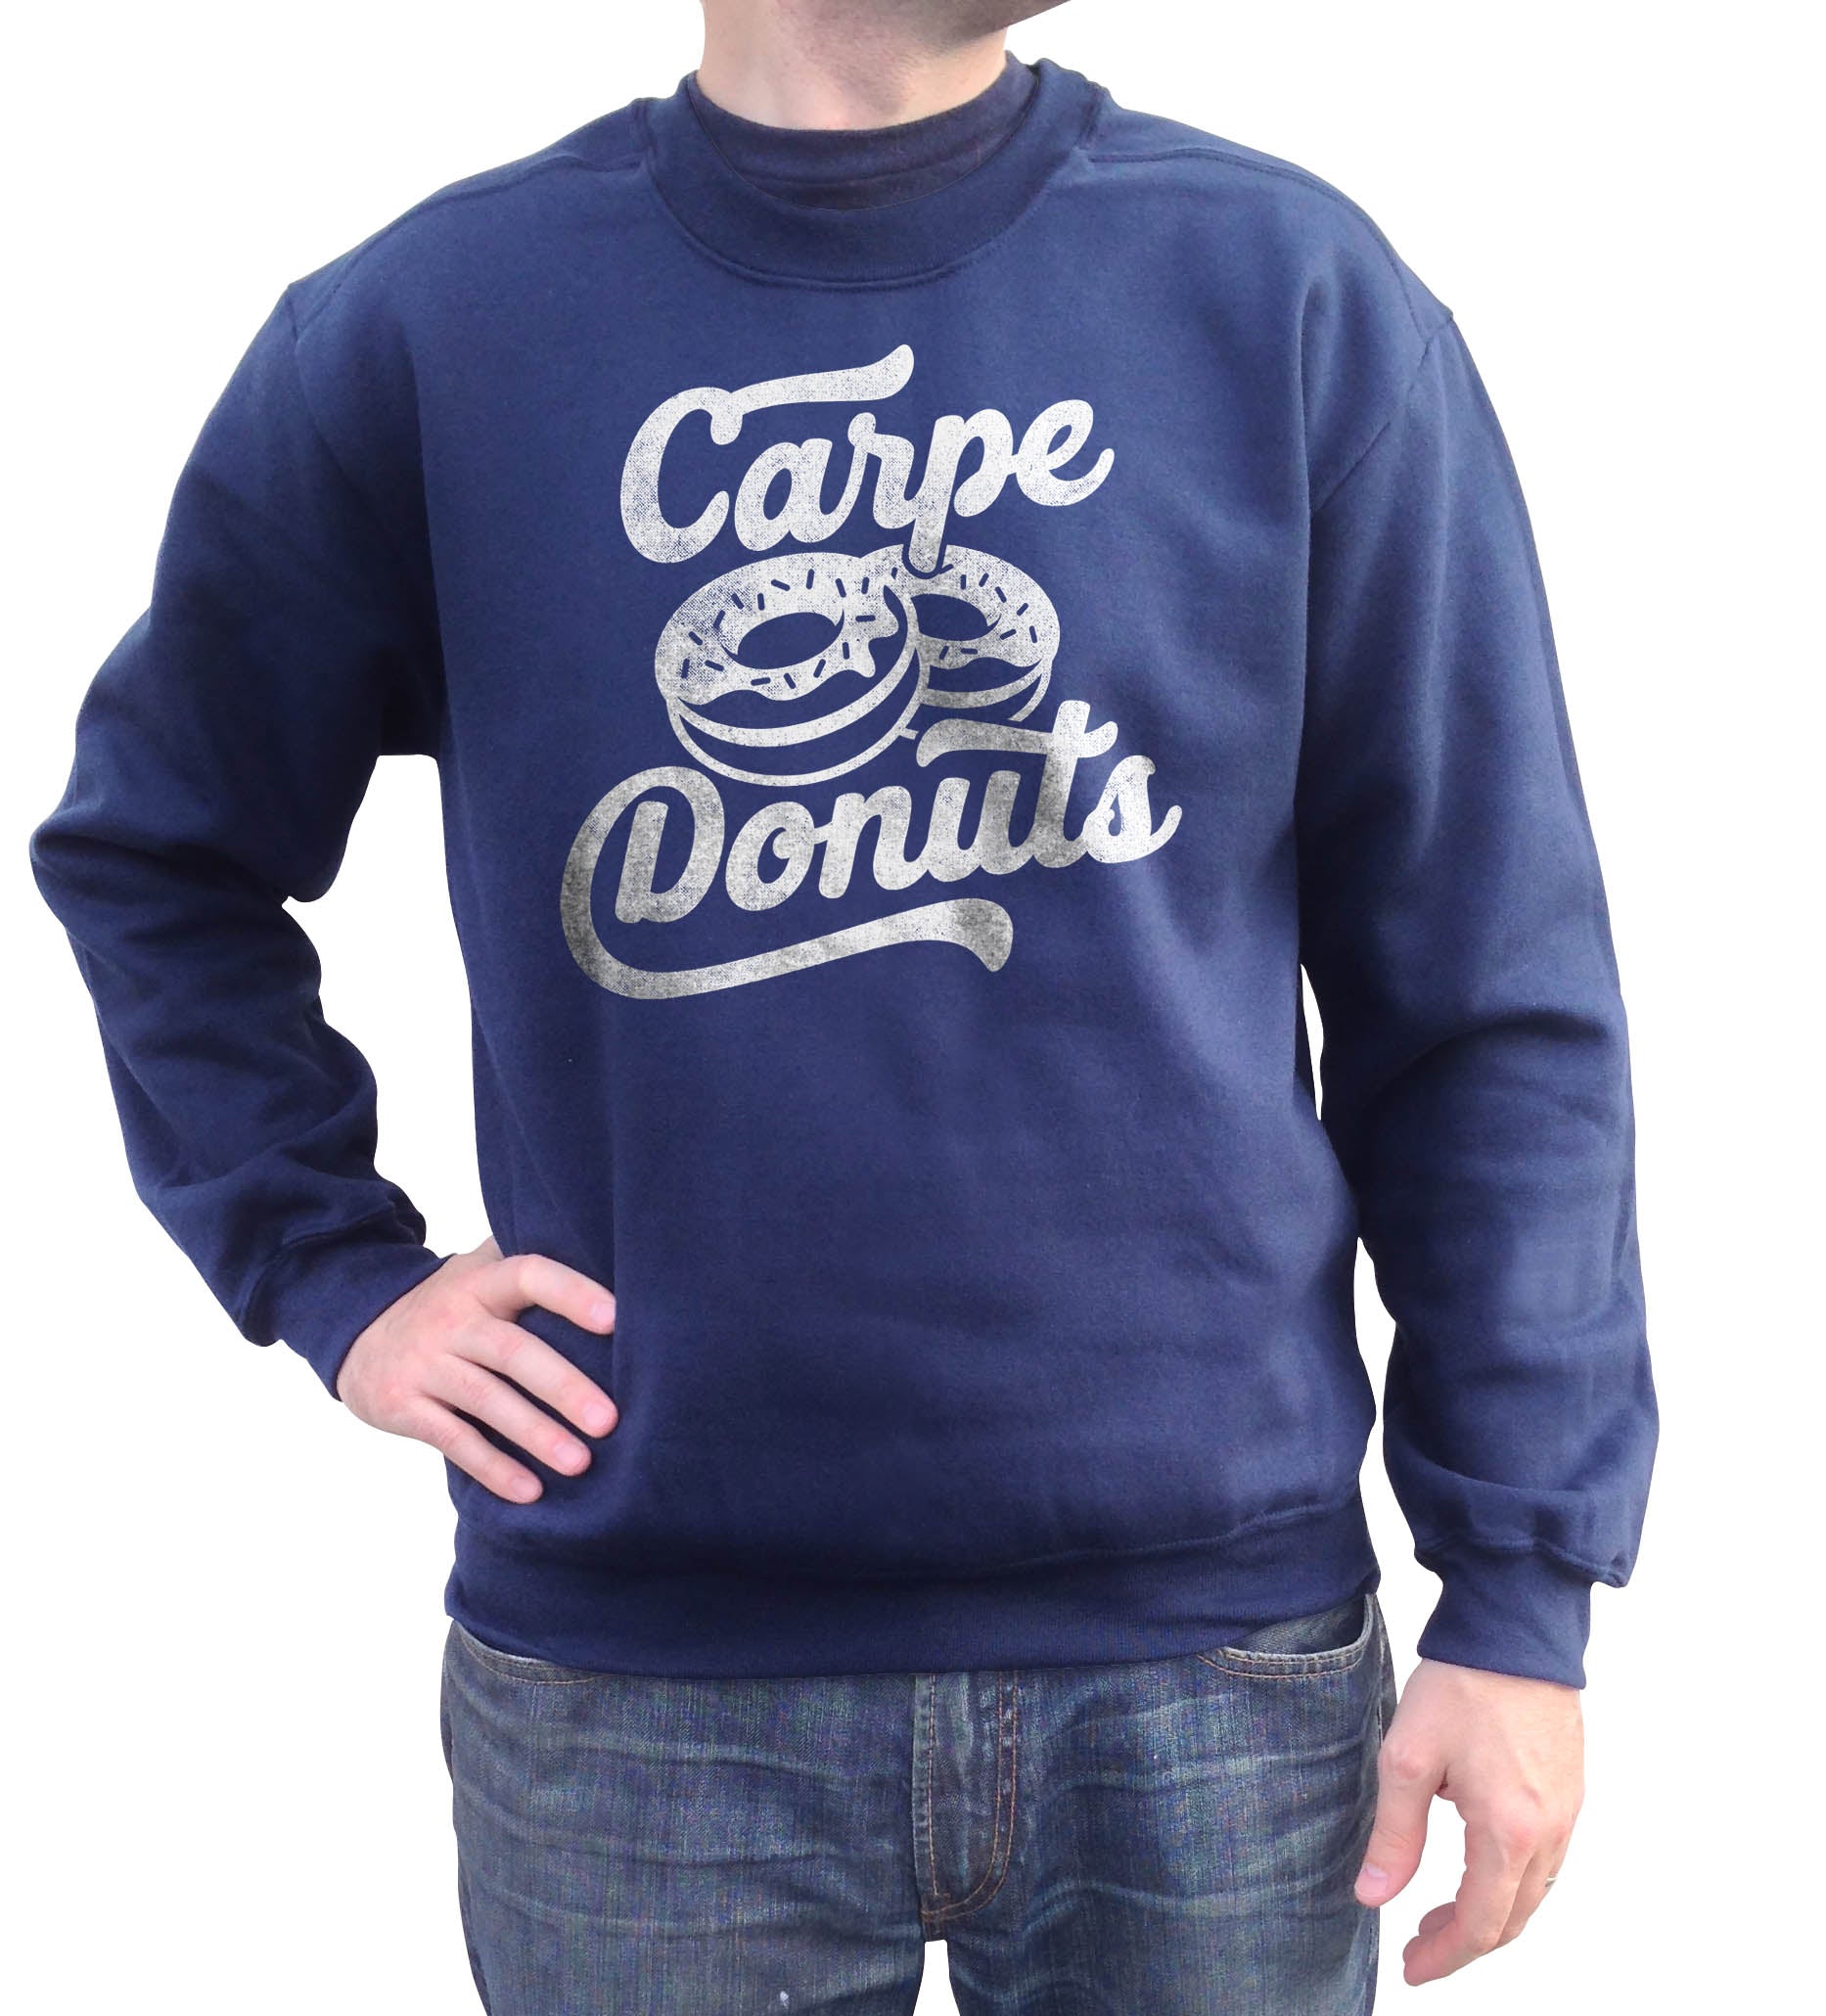 Unisex Carpe Donuts Sweatshirt - Funny Donut Shirt